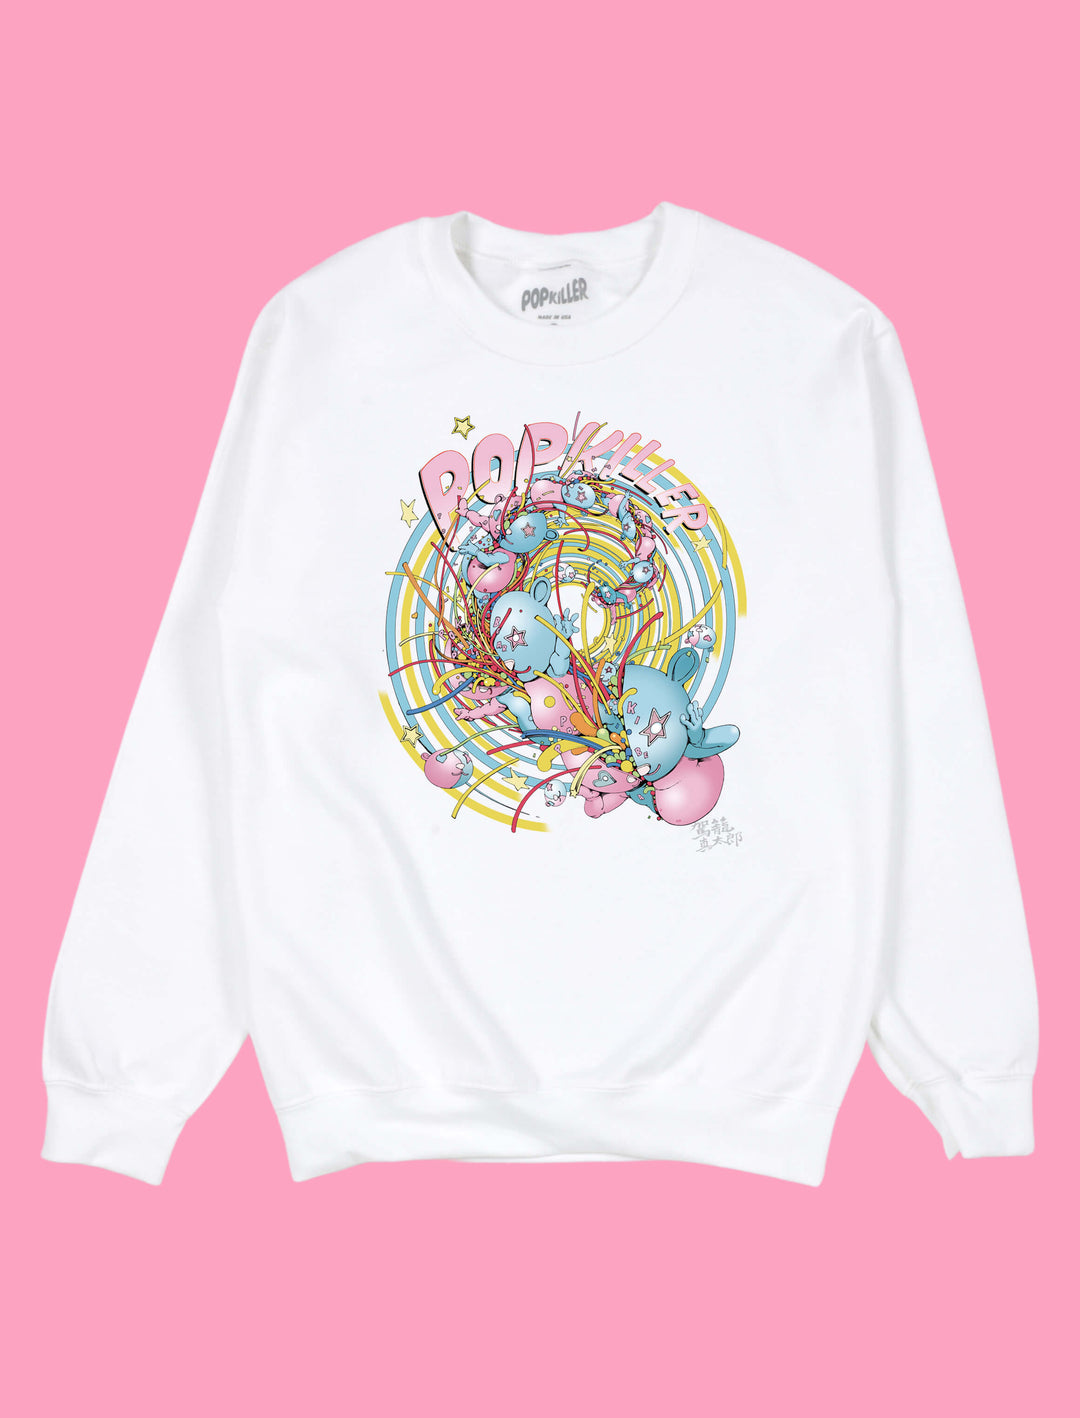 Popkiller Artist Series Shintaro Kago Pokkila Party Portal Sweatshirt